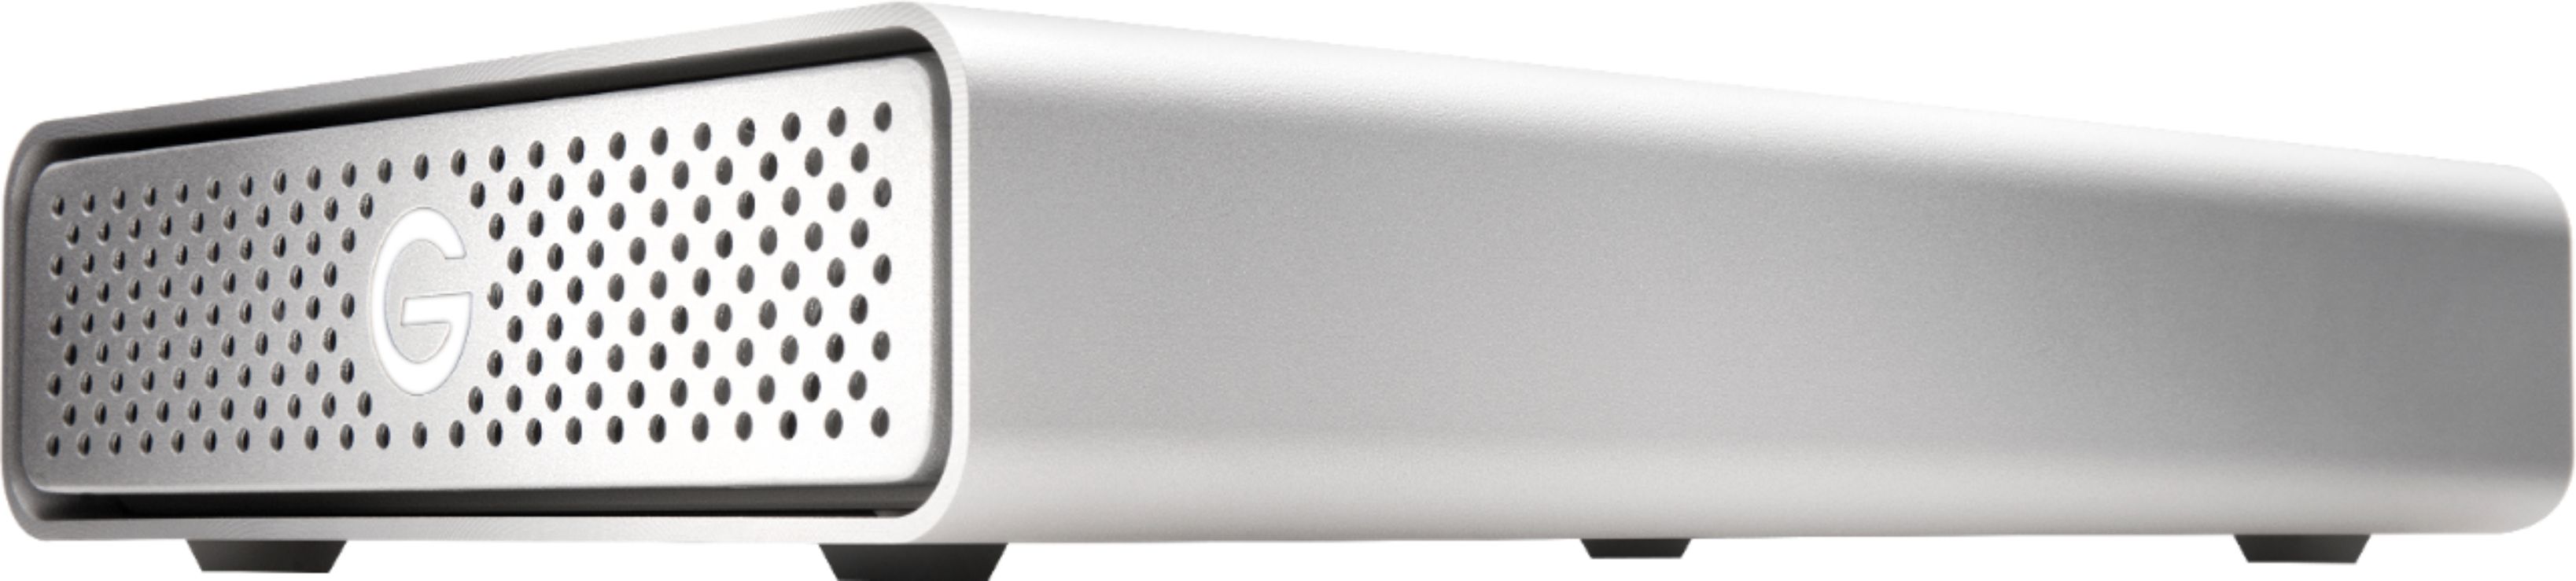 Angle View: G-Technology - G-DRIVE USB 3.0 6TB Desktop Hard Drive - Silver